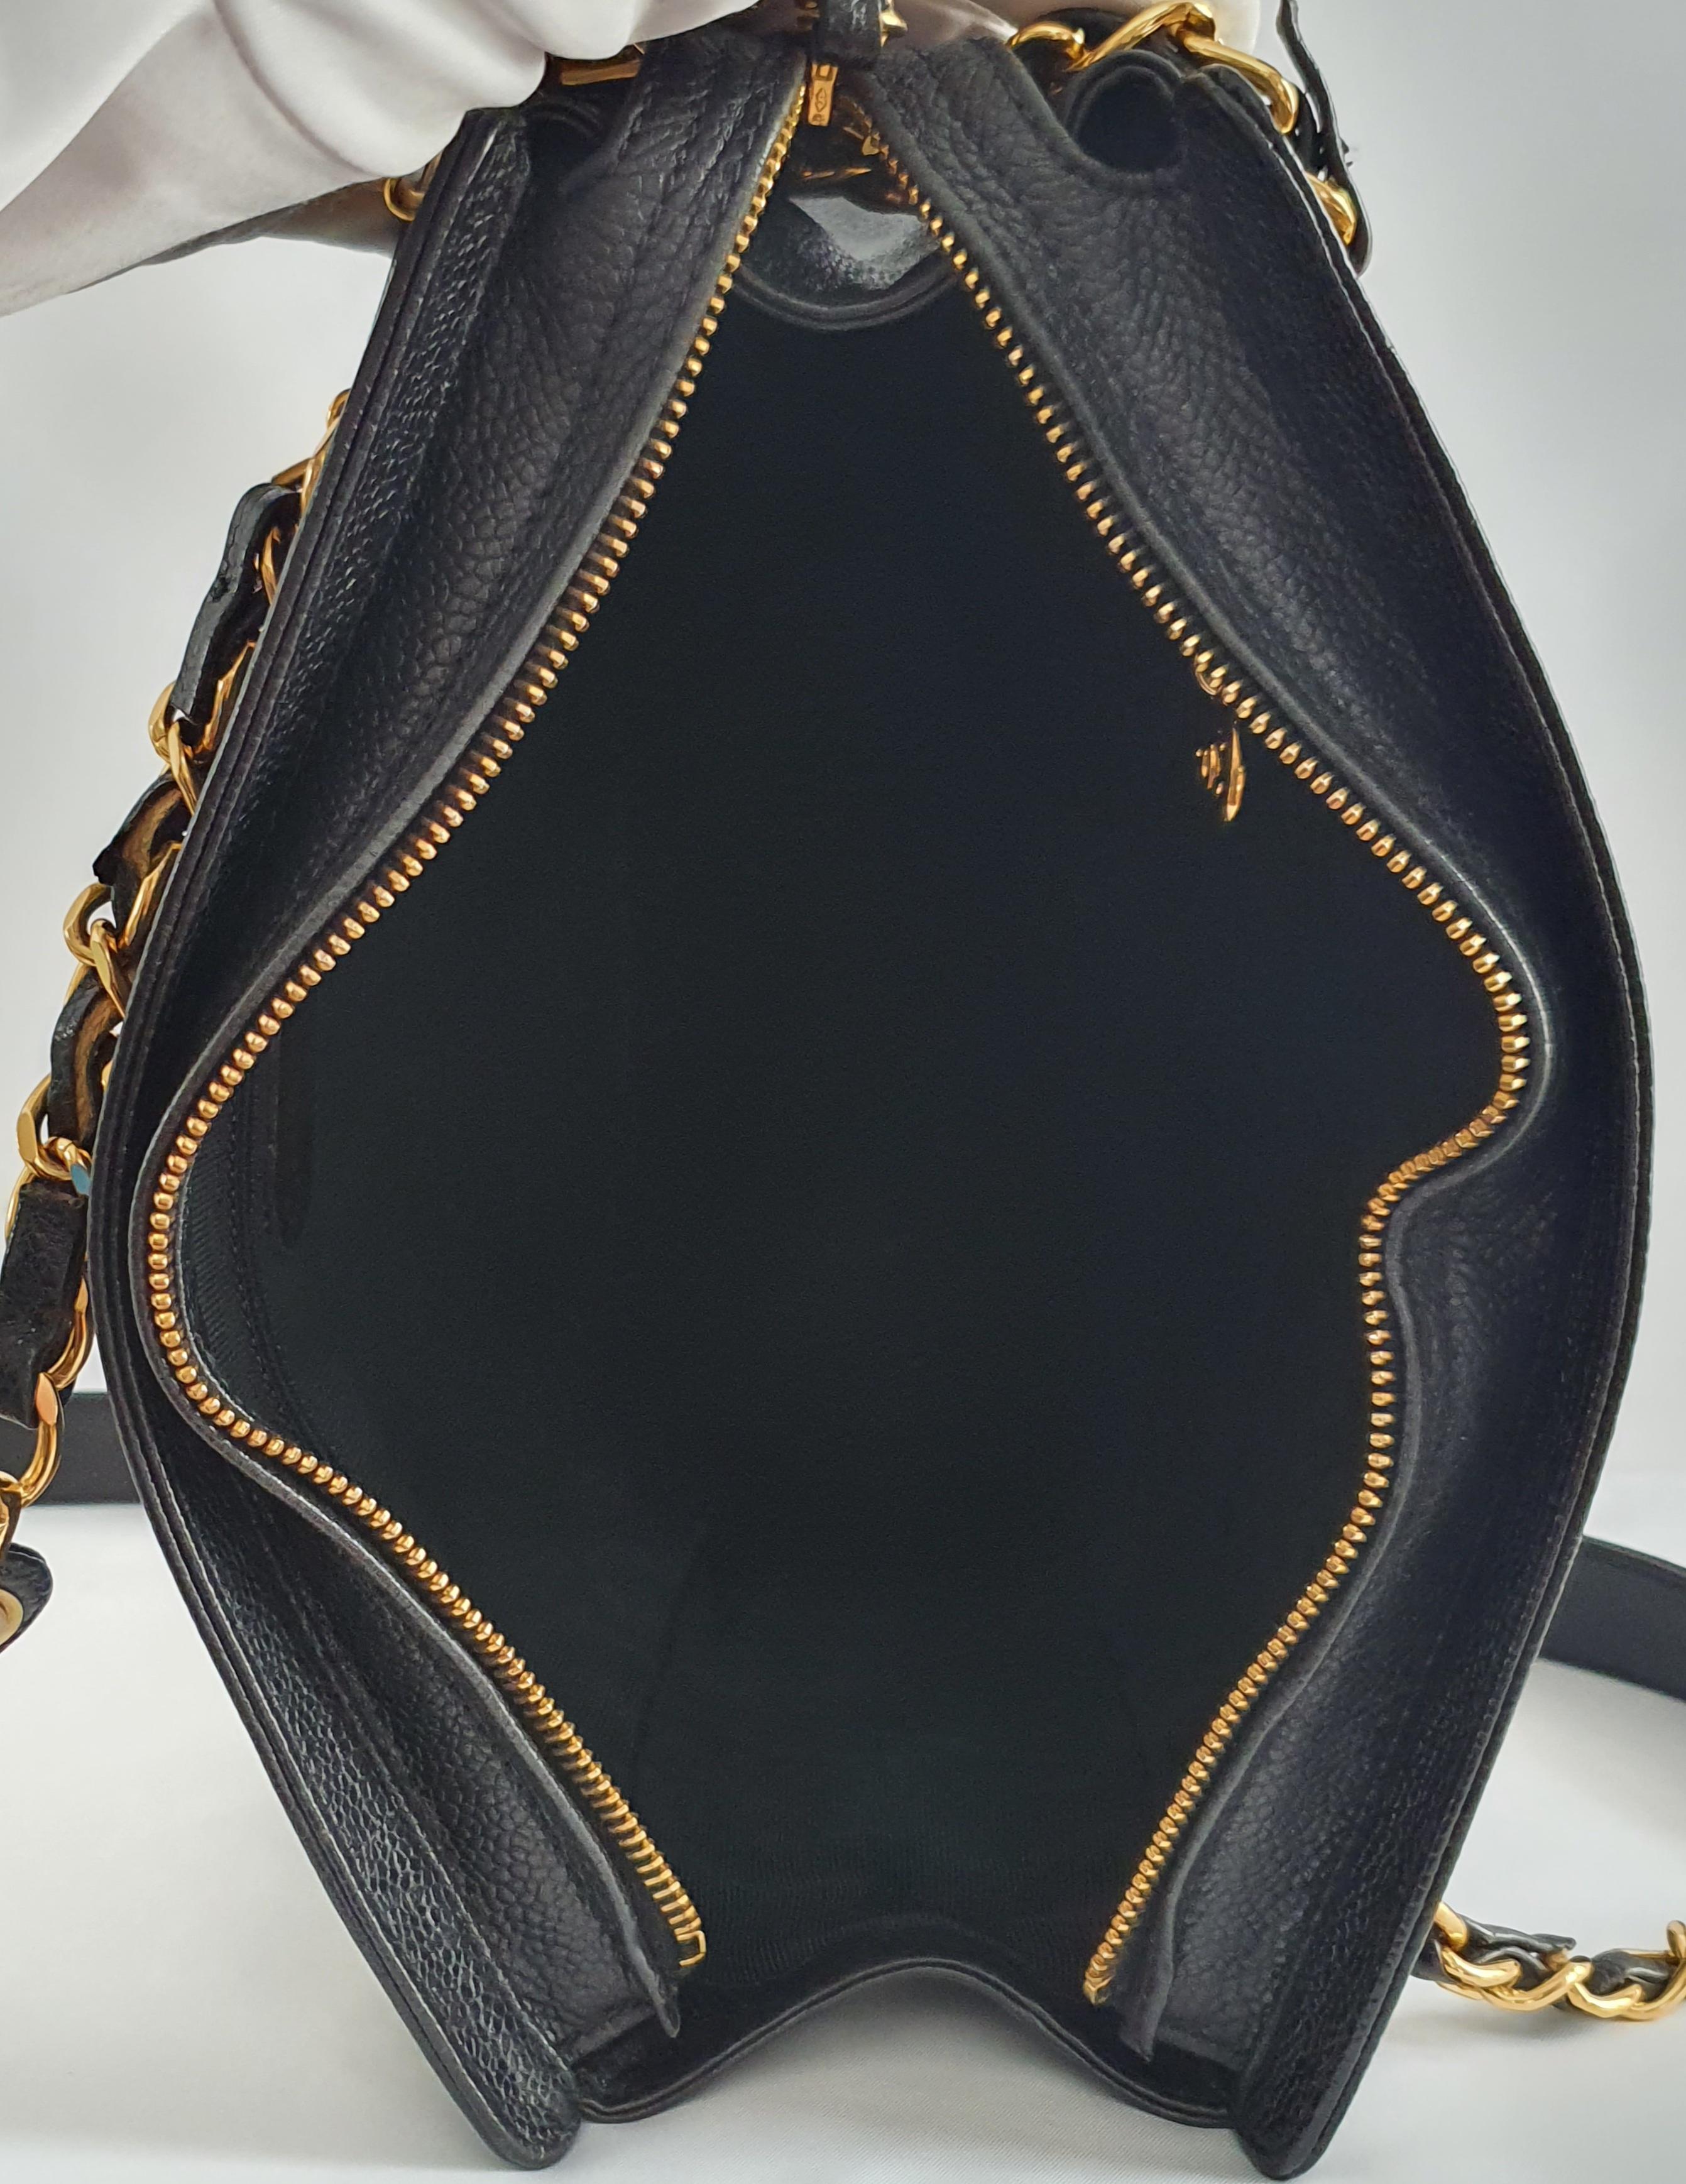 Women's Chanel Vintage in black leather